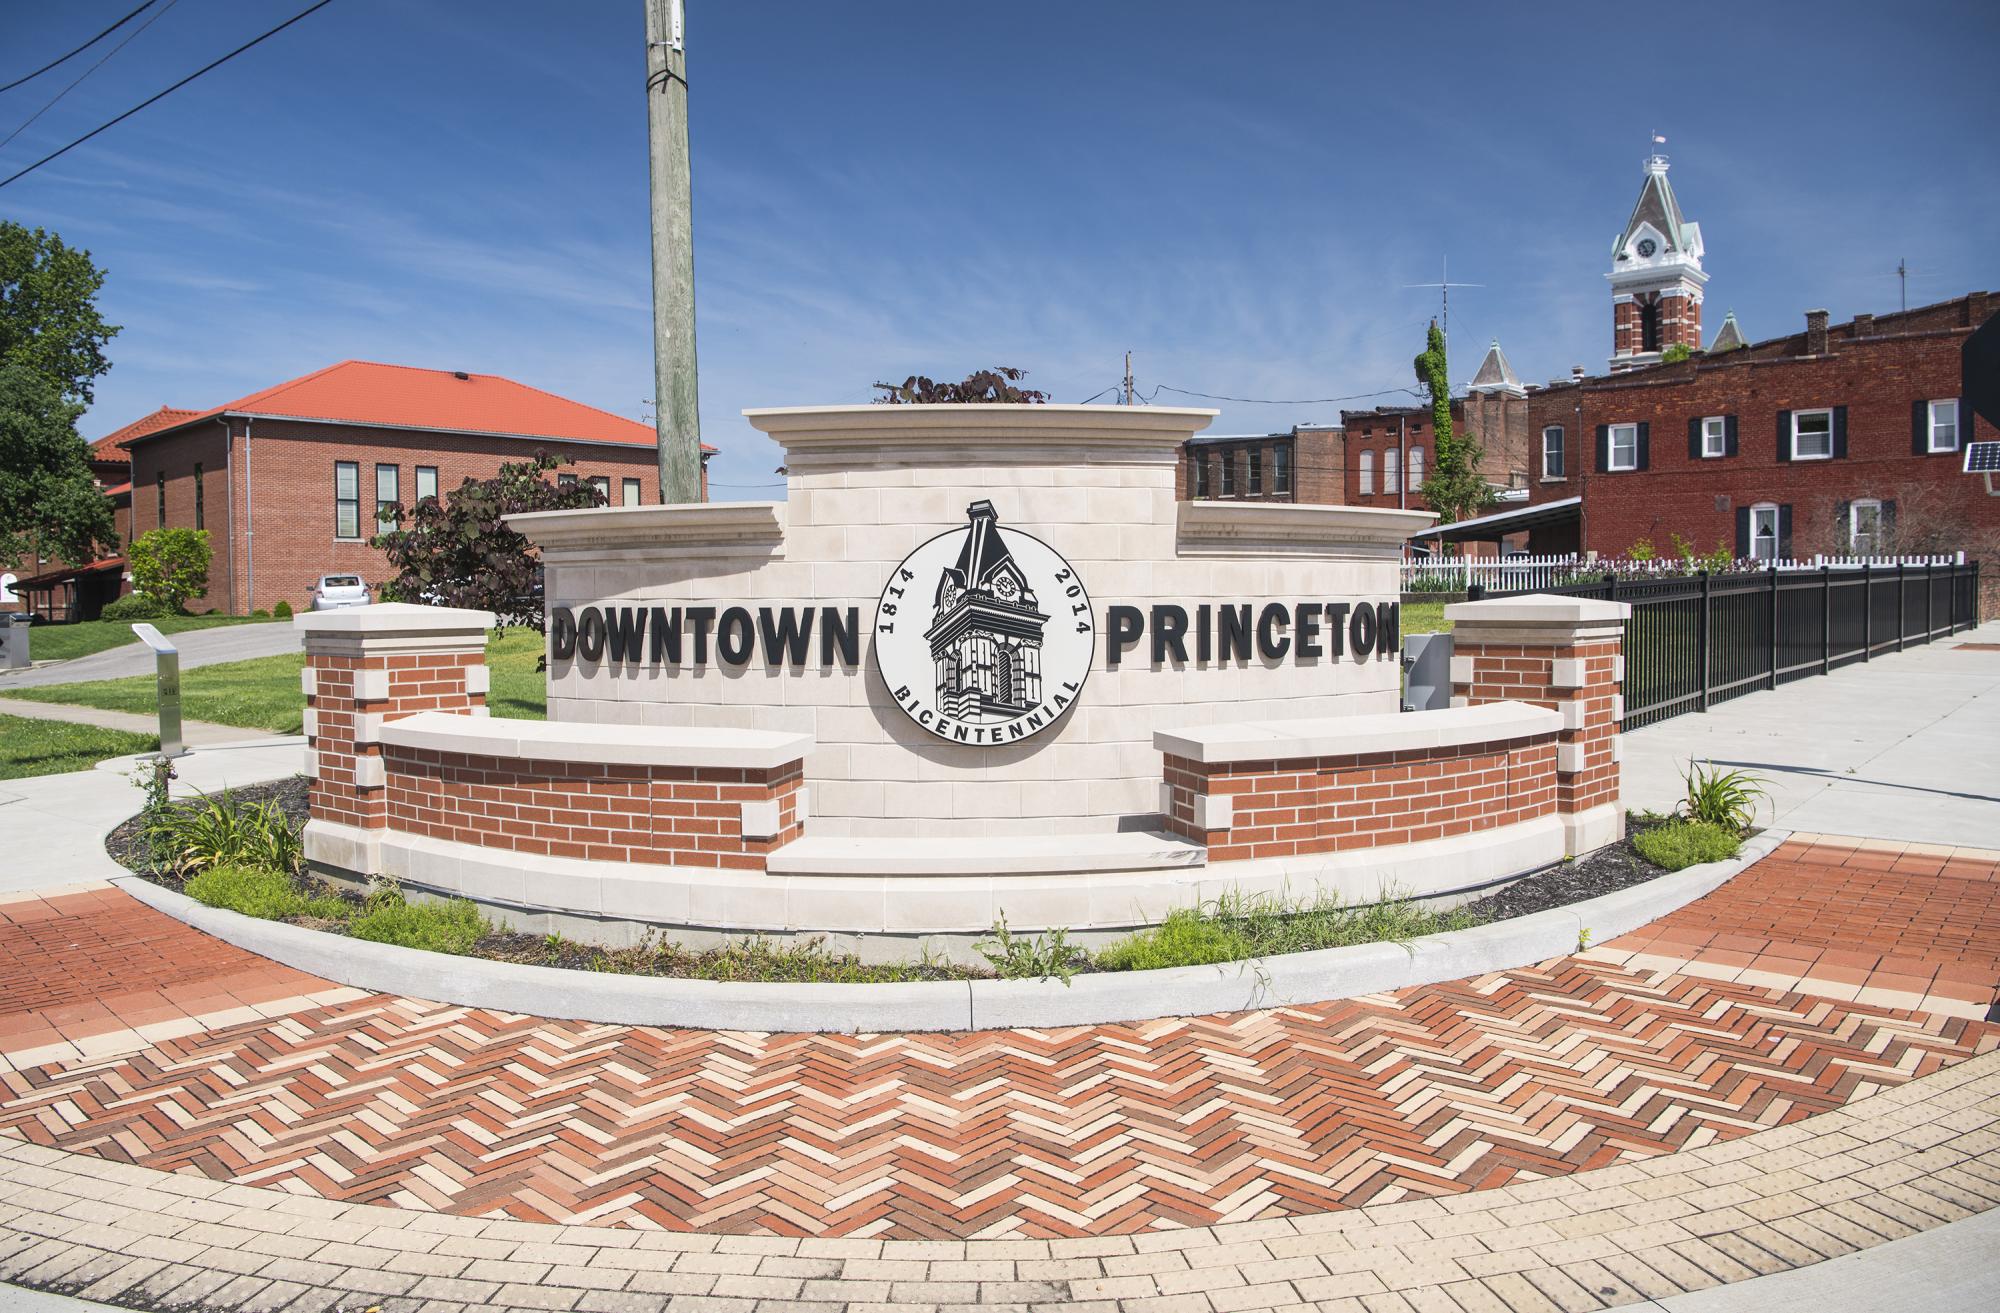 Princeton Indiana - Downtown Princeton Sign